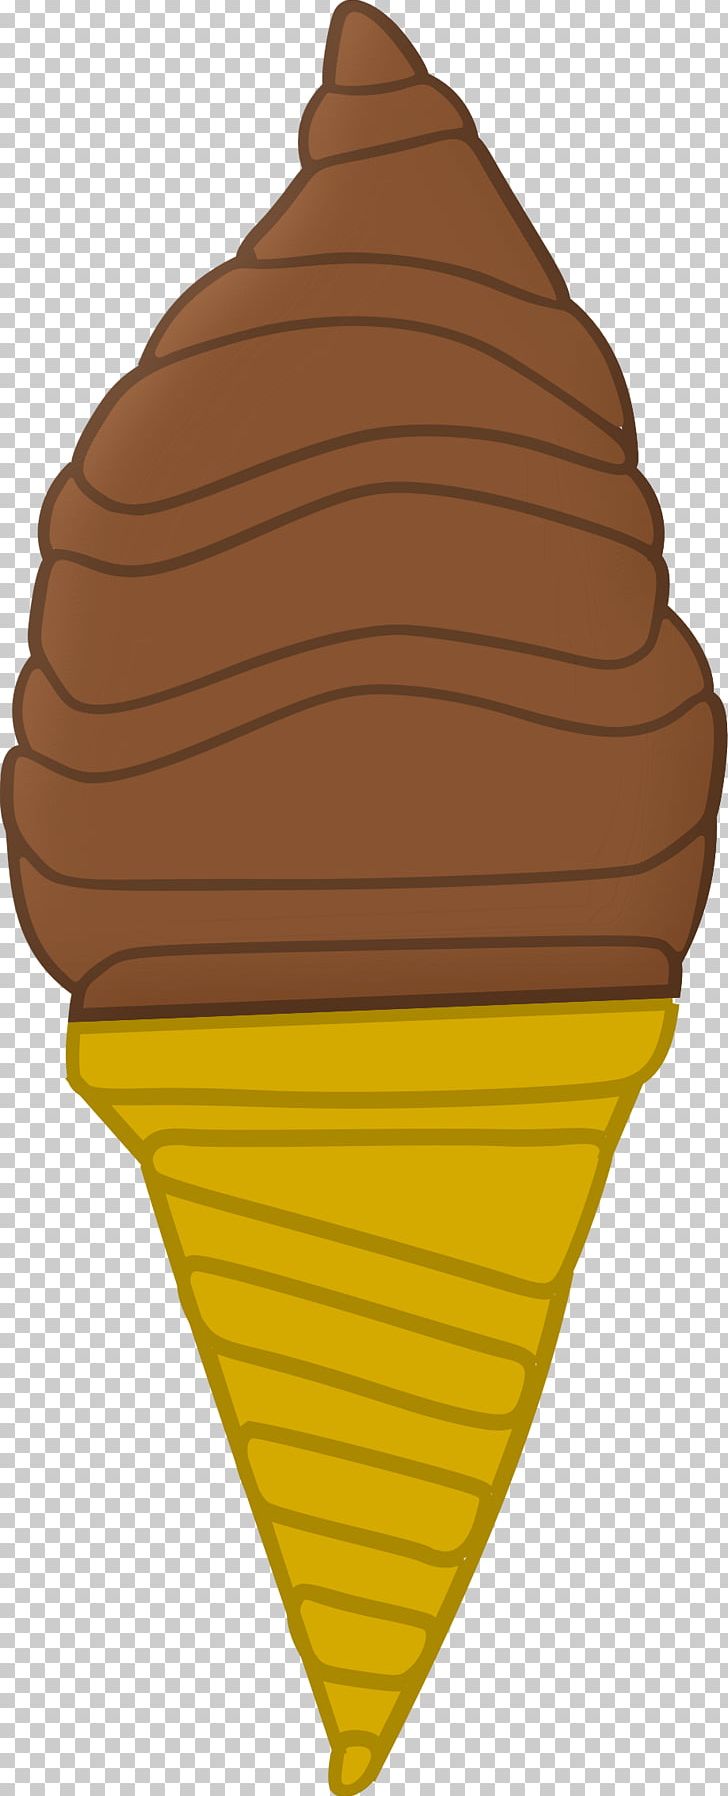 Ice Cream Cones Sundae Chocolate Ice Cream PNG, Clipart, Chocolate, Chocolate Ice Cream, Cream, Dessert, Food Free PNG Download